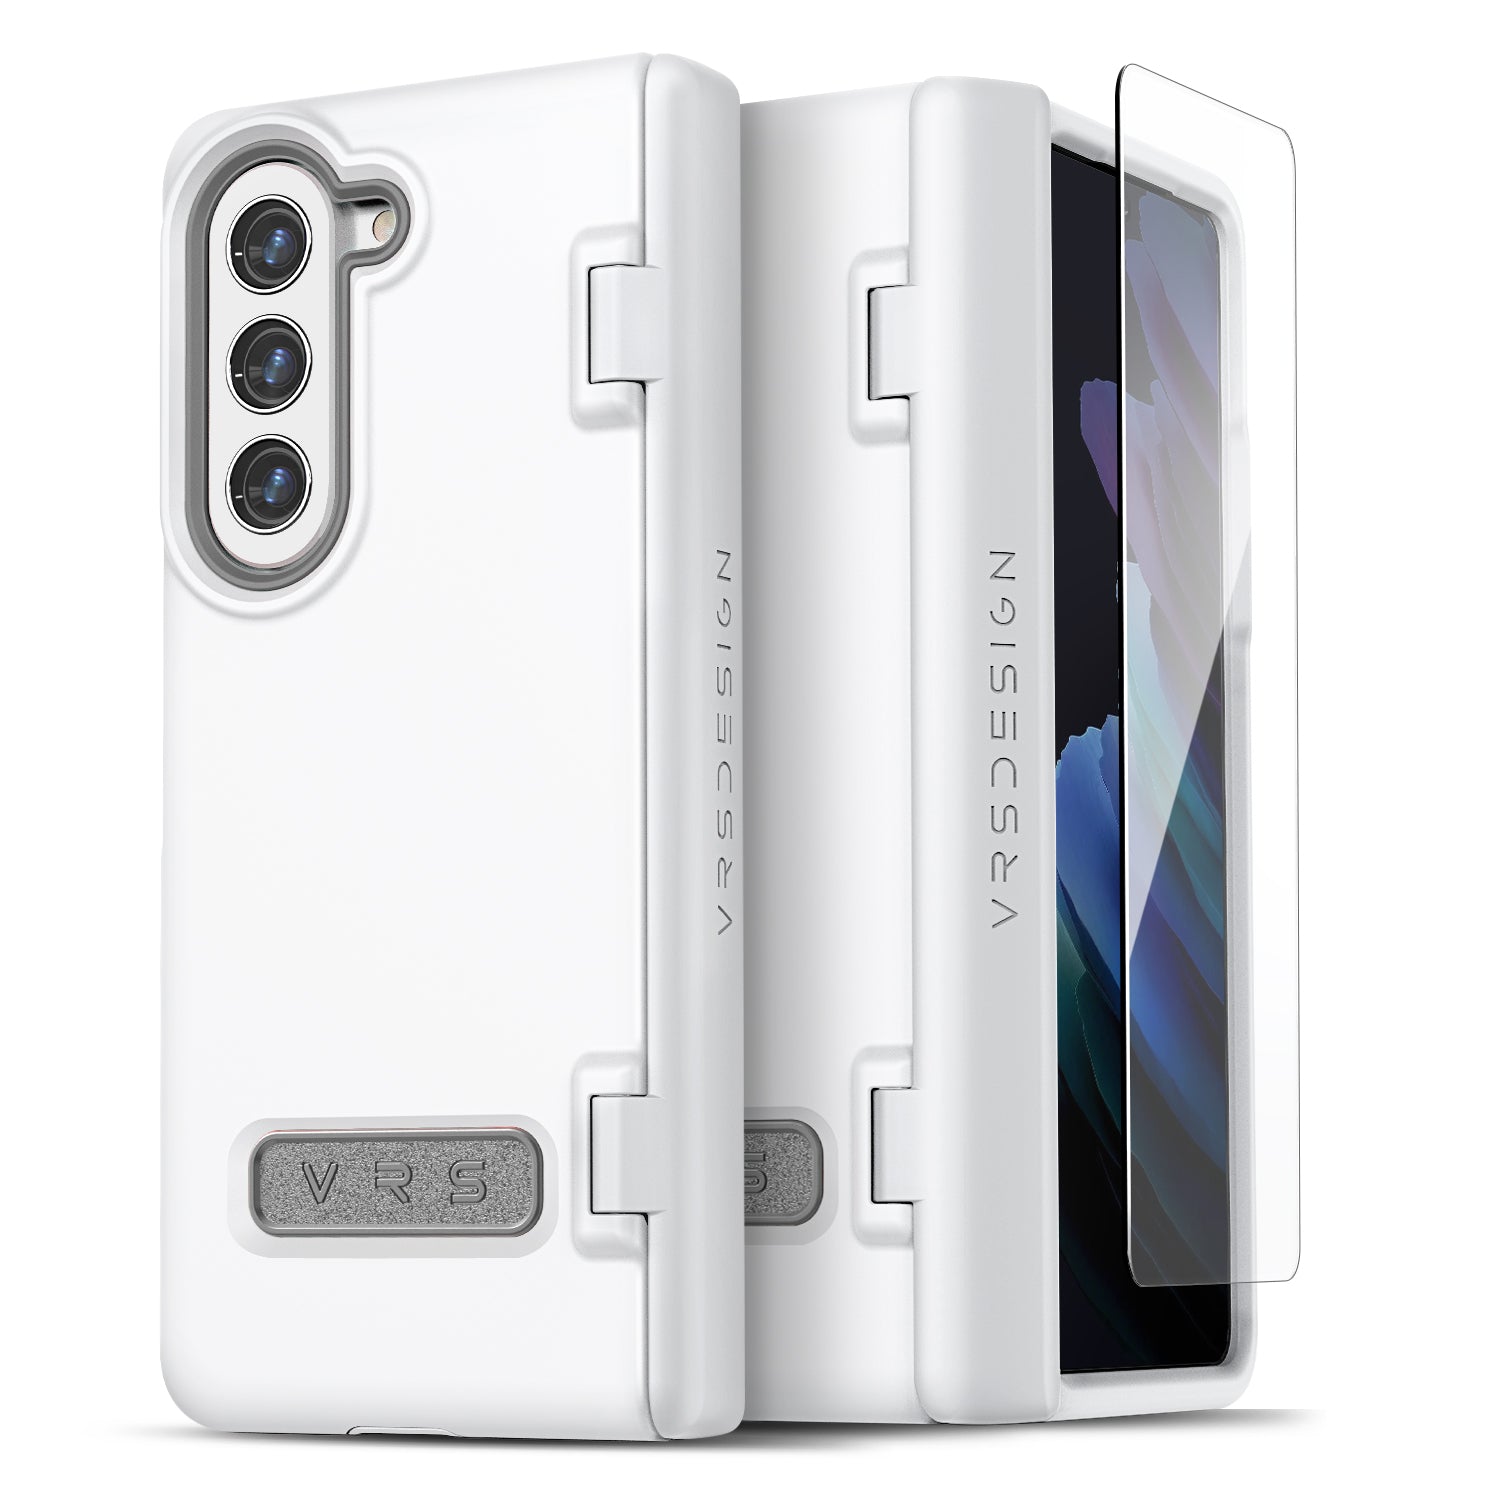 New Galaxy Z Fold 5 modern rugged lightweight minimalist case by VRS – VRS  Design